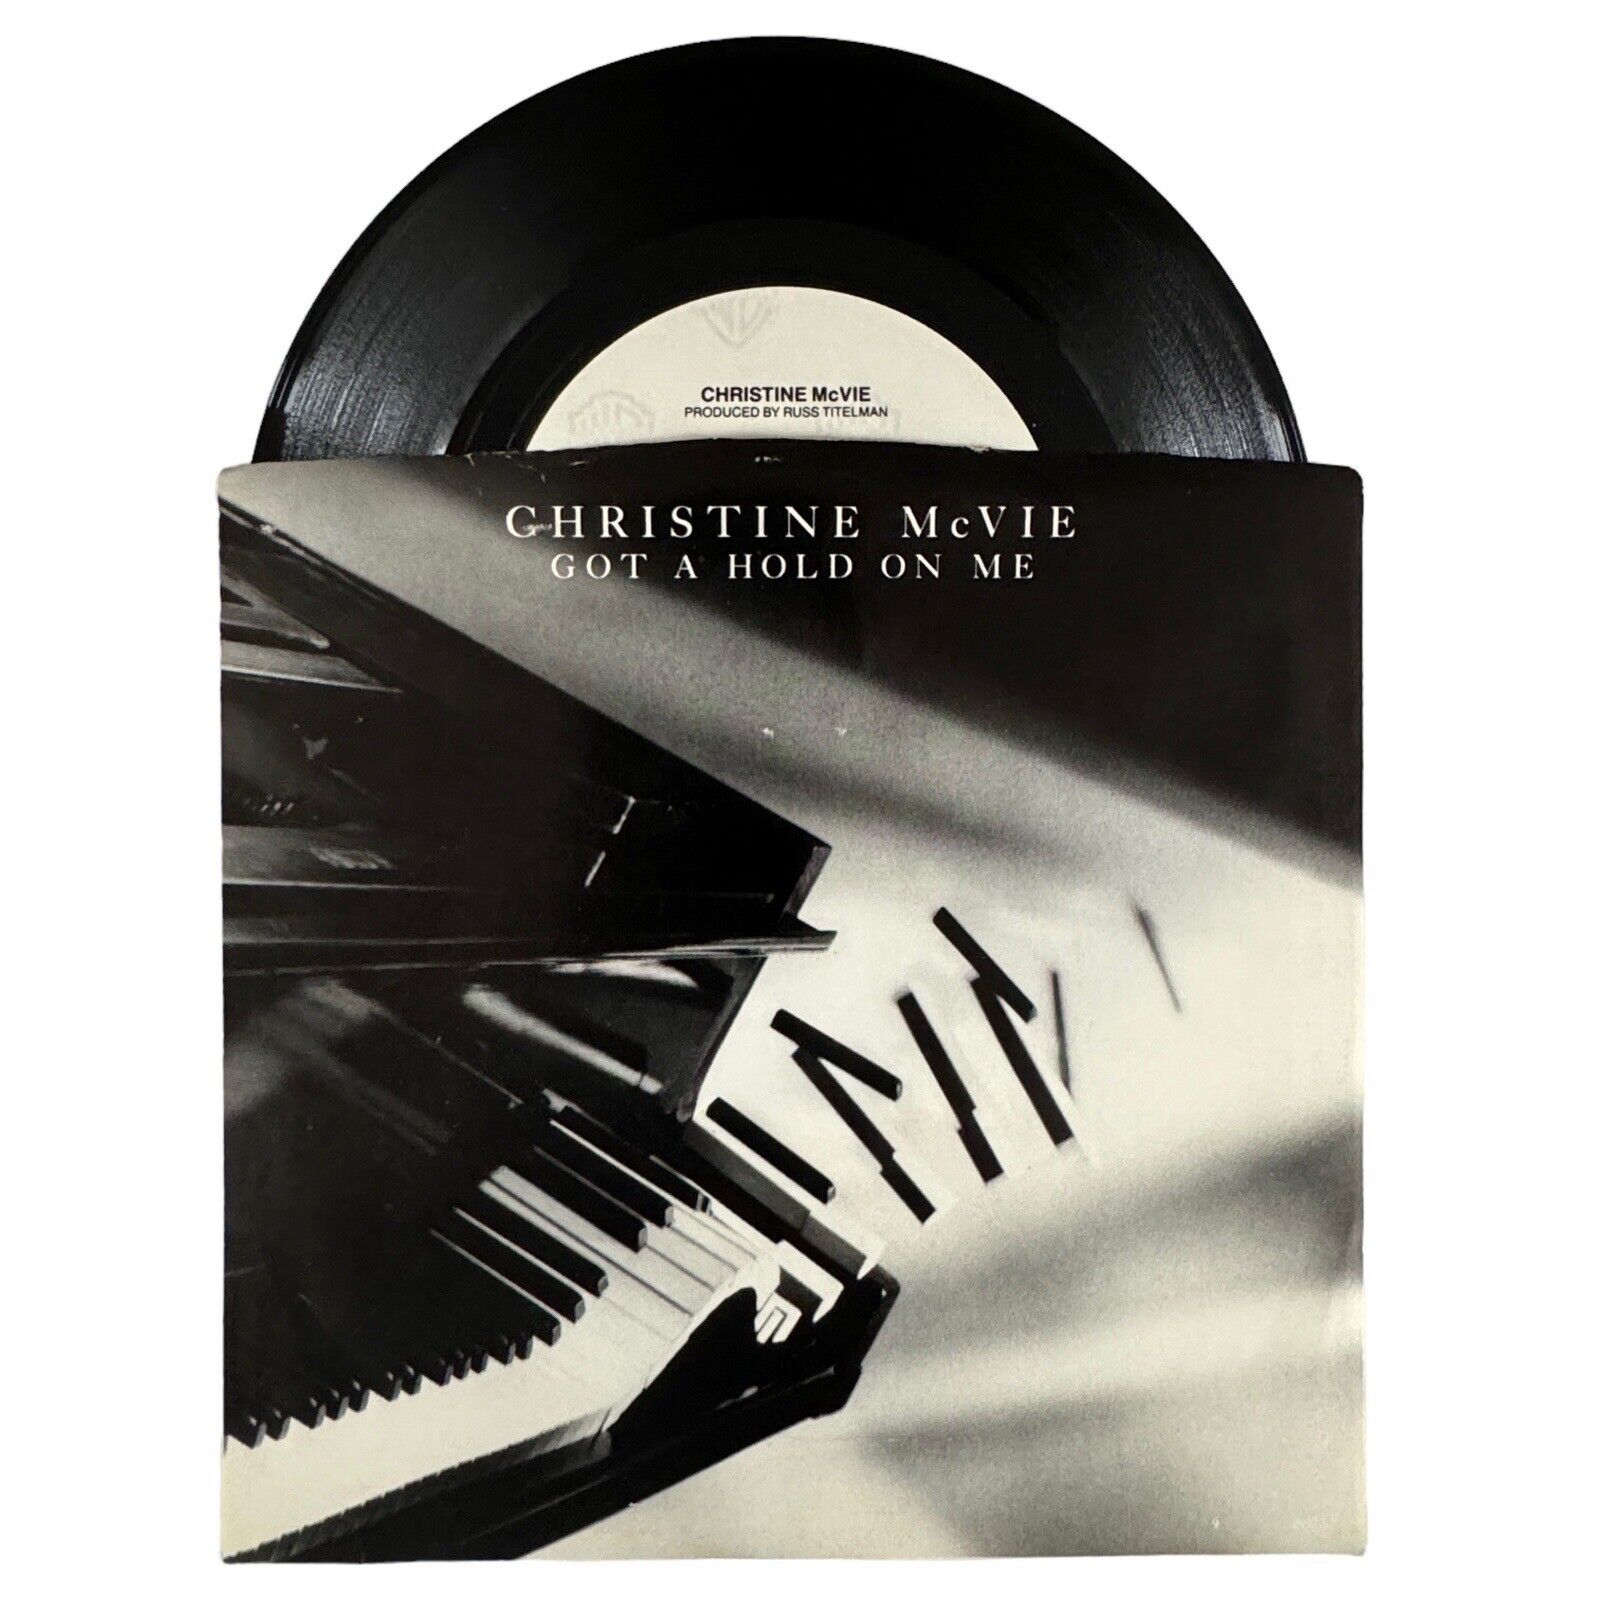 Christine McVie - Got a Hold on Me (1984) 7” 45 DJ Promo NM